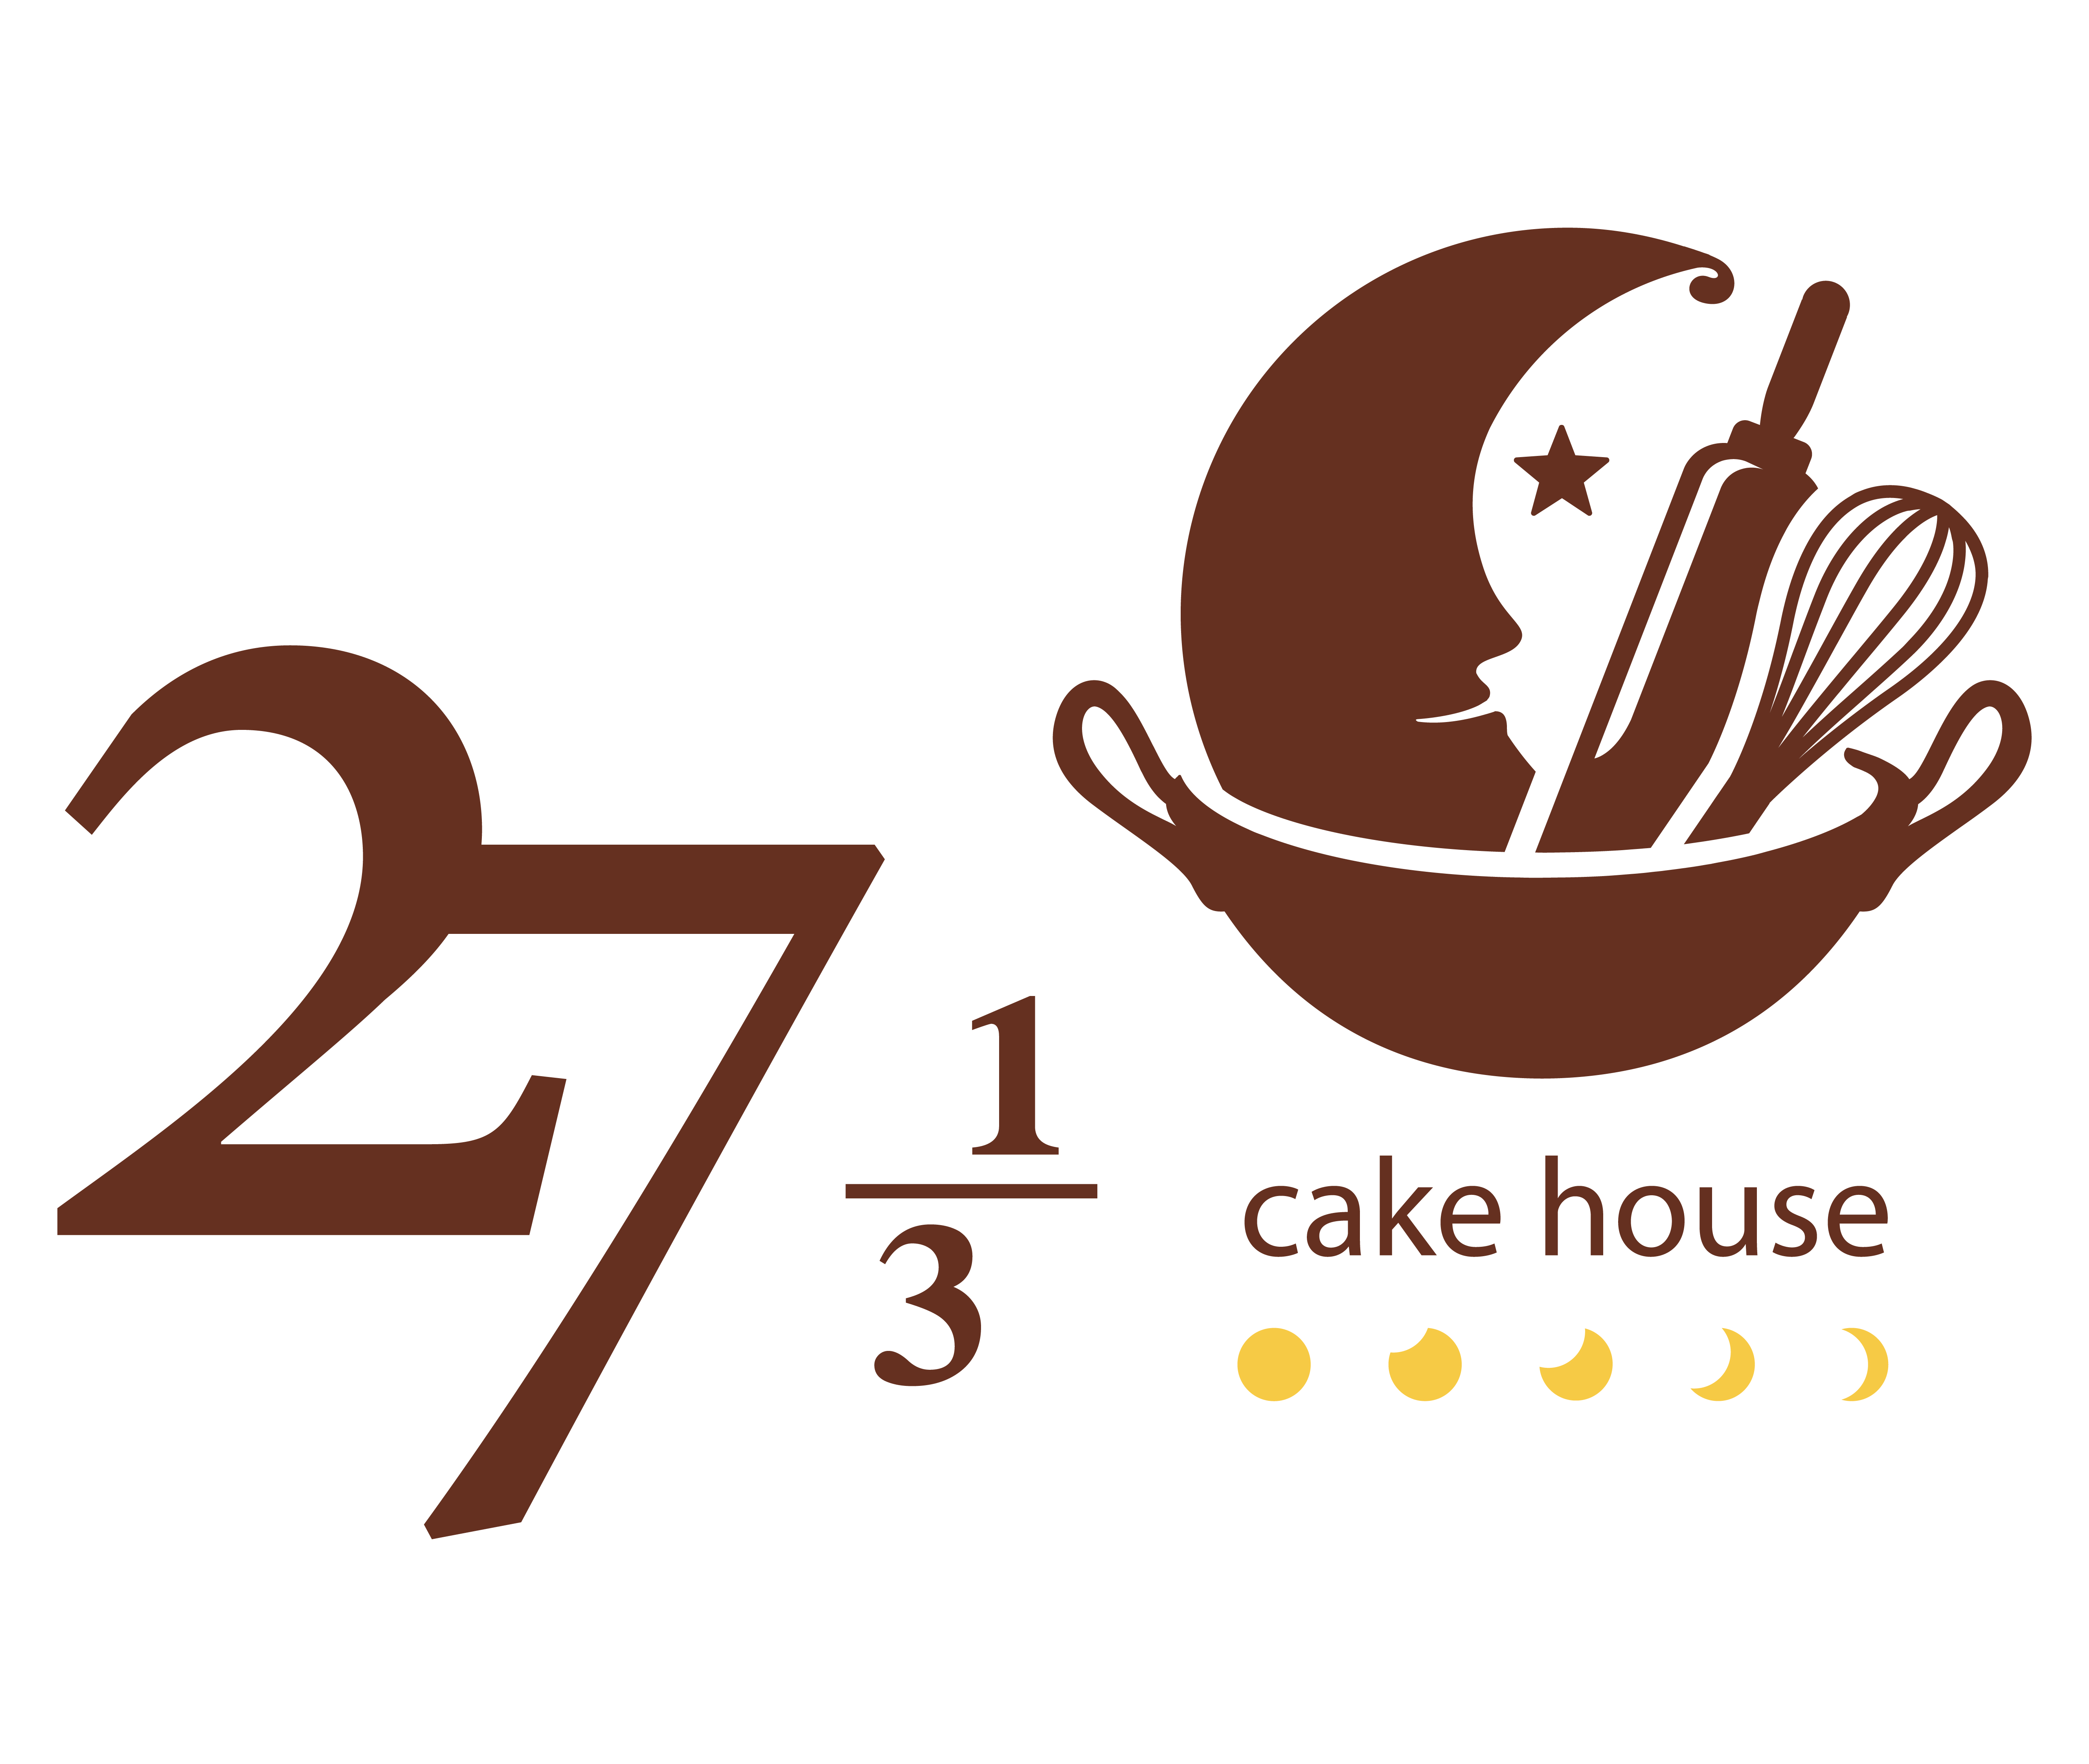 27 1/3 cake house